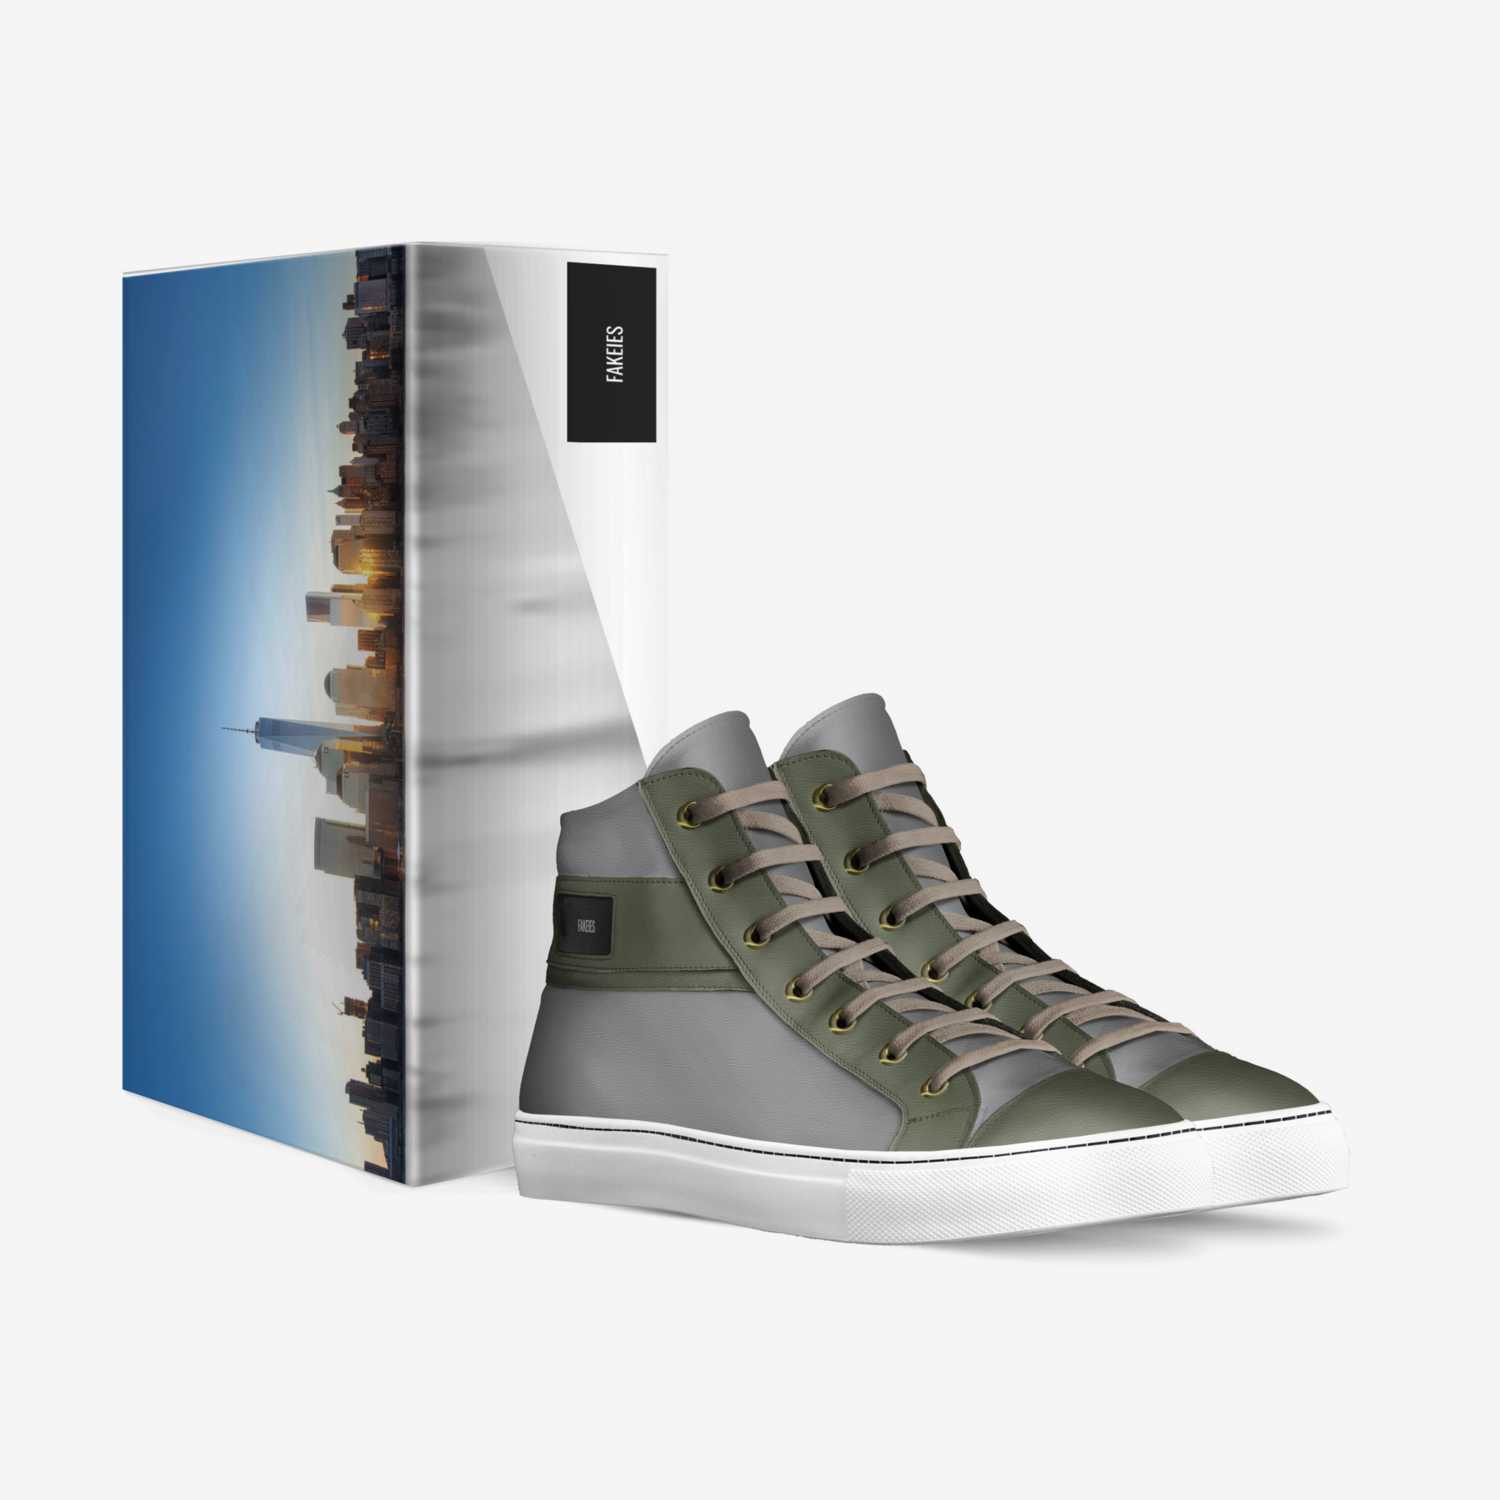 Fake custom made in Italy shoes by Isaiah David Perez | Box view